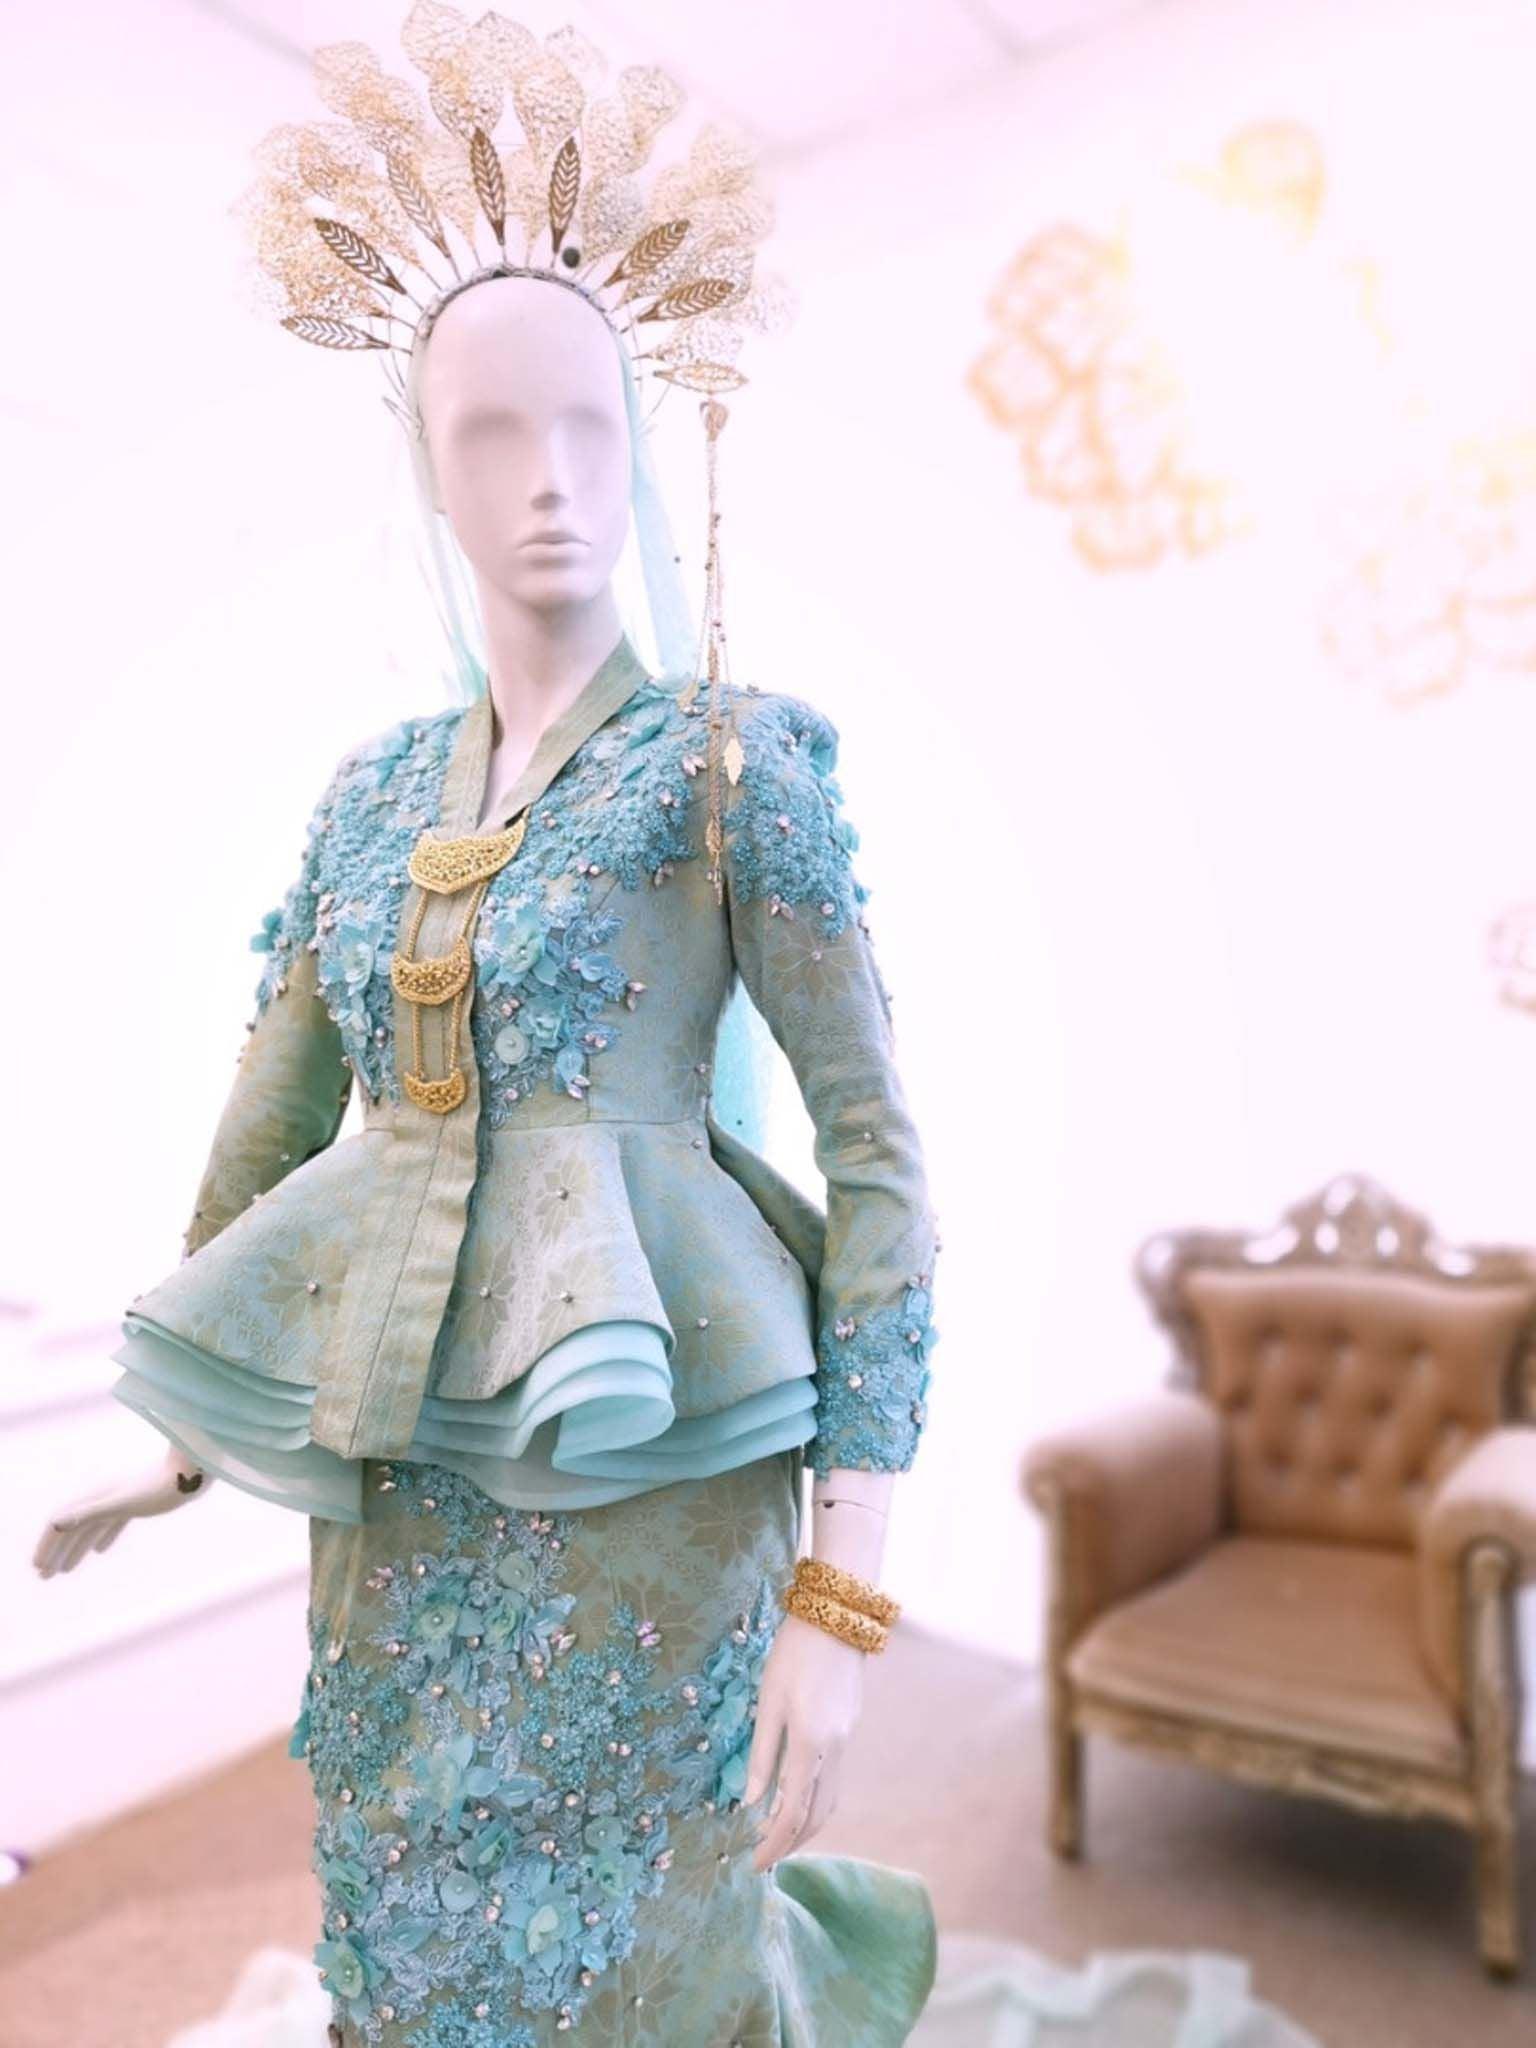 MARISSA - Breathtaking Two-Piece Peplum Songket Wedding Dress, Mint Green and Light Gold from PP Signature Bridal Boutique-Tempah Baju Pengantin Online